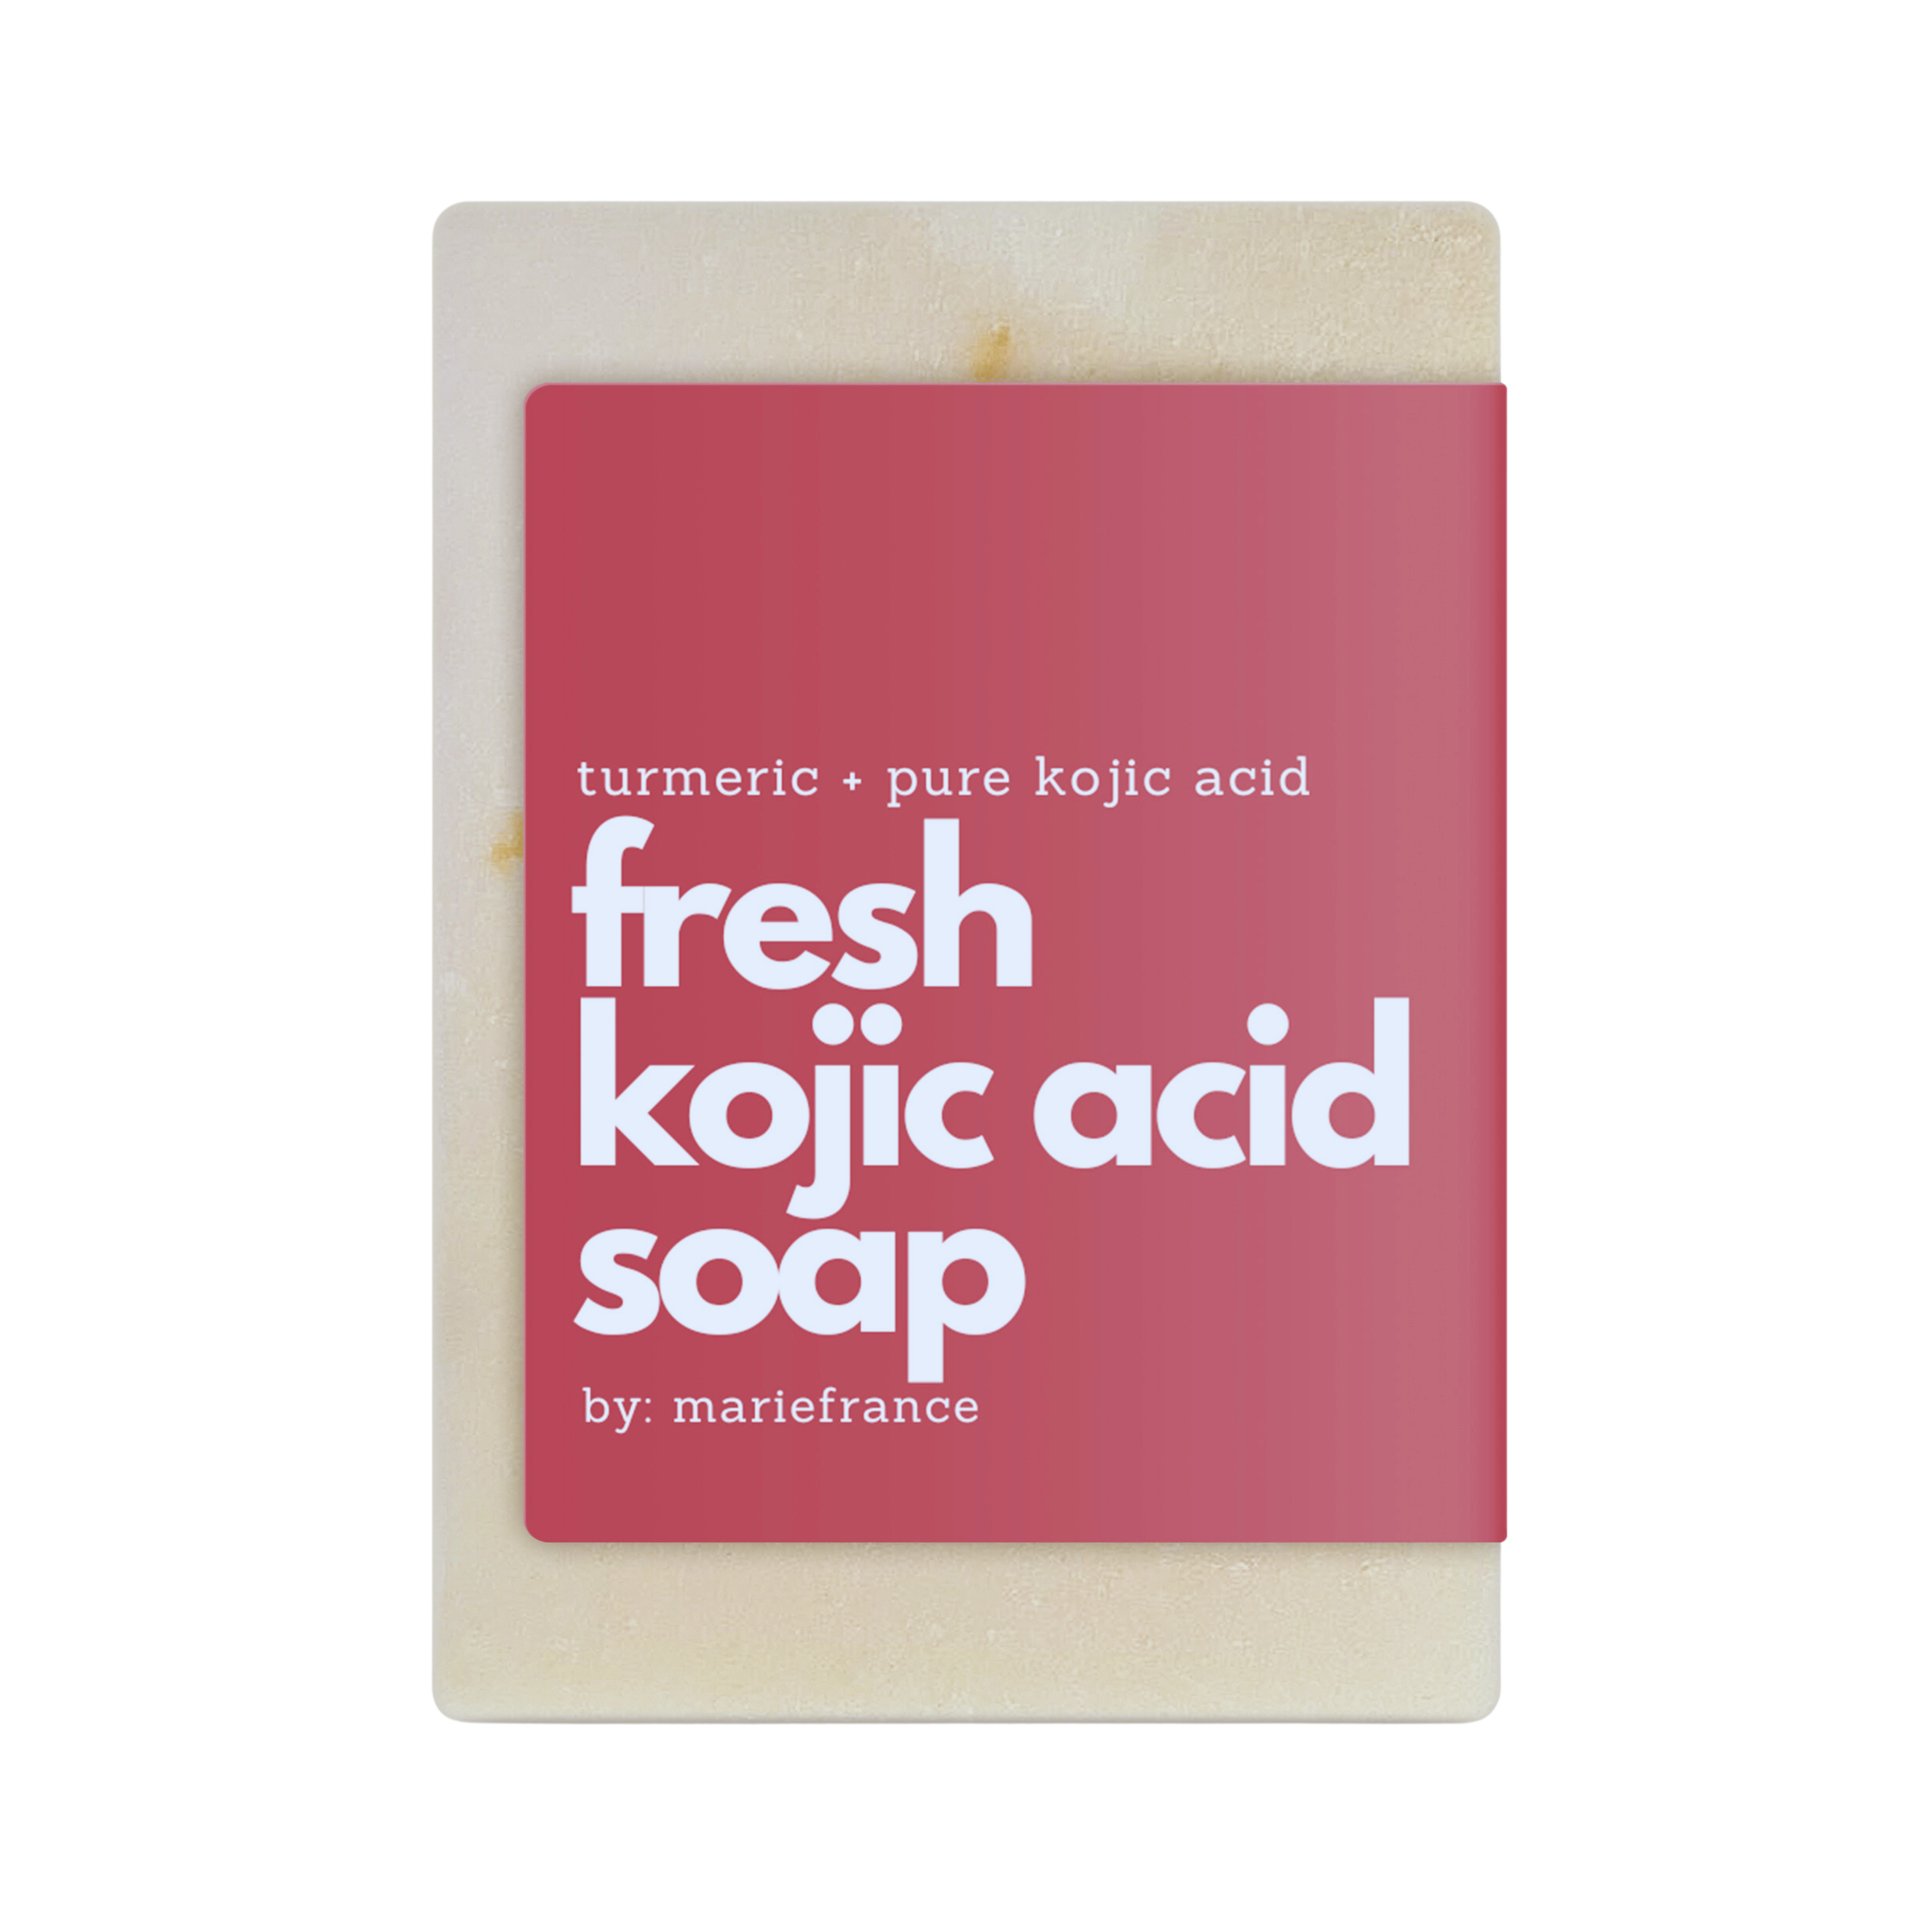 kojic acid soap original